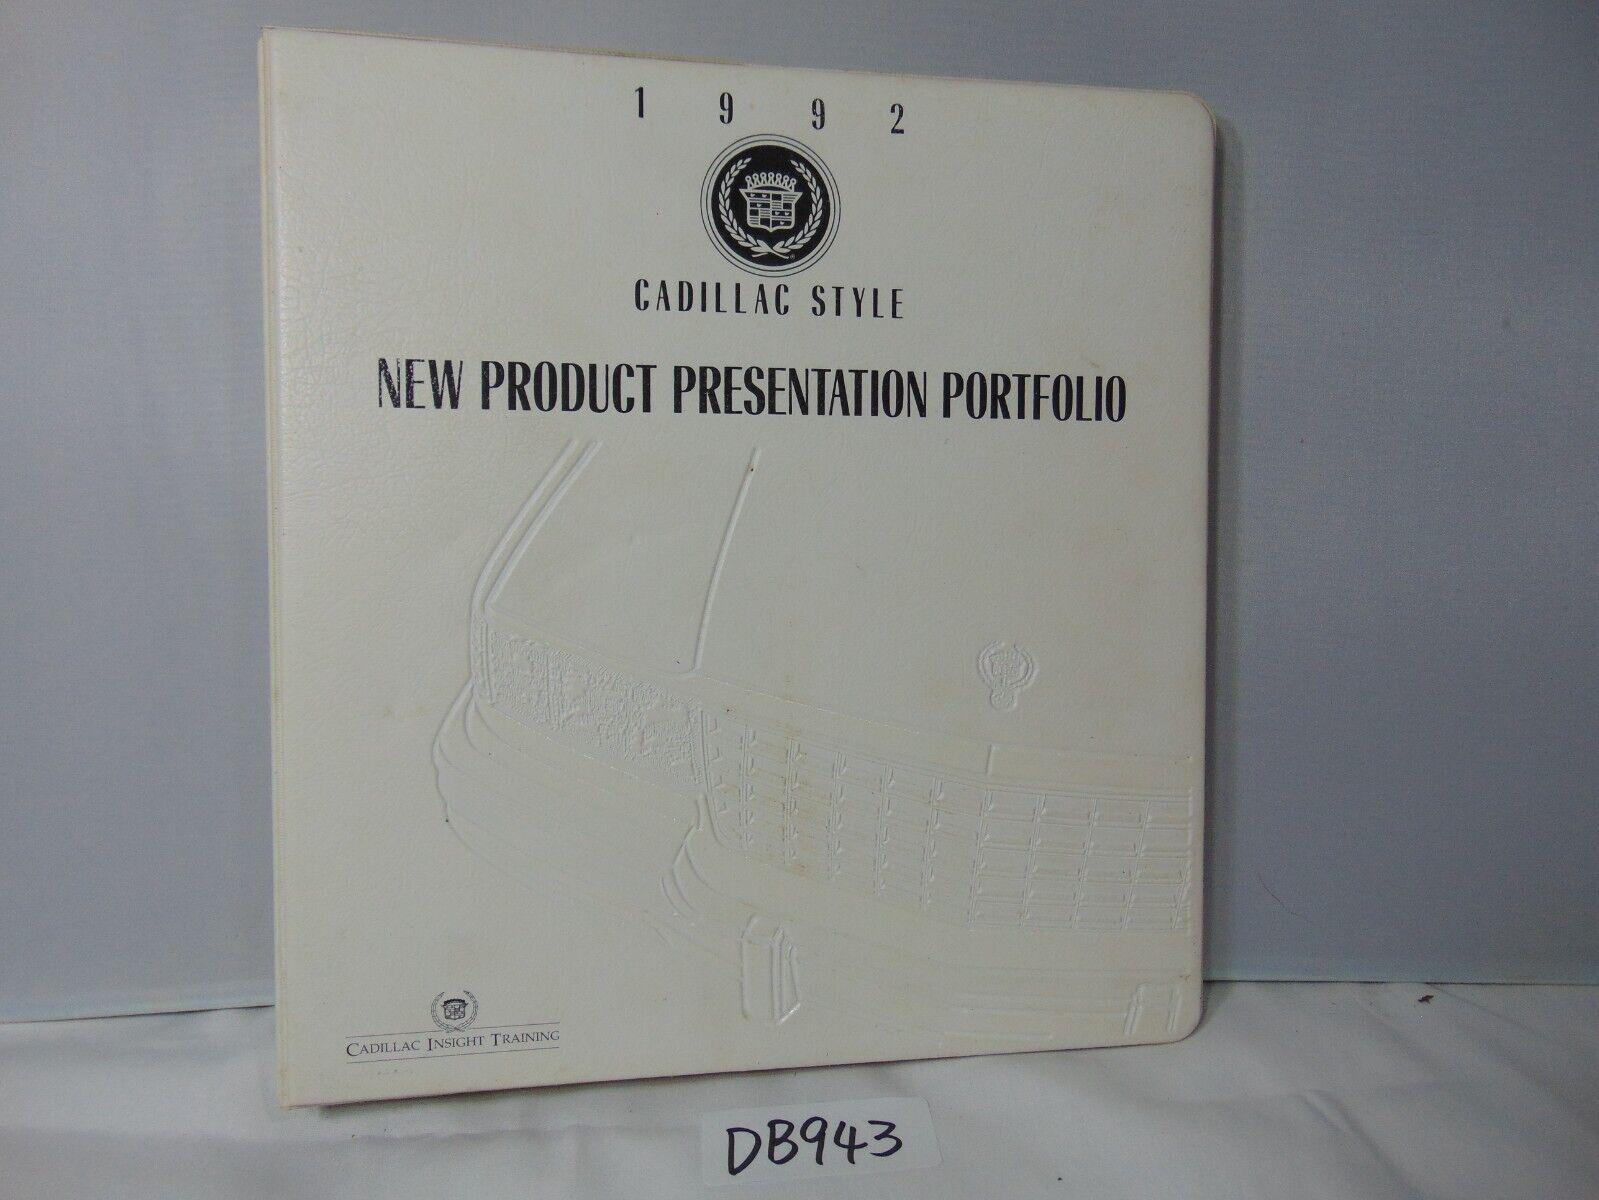 1992 CADILLAC NEW PRODUCT PRESENTATION PORTFOLIO DATA BOOK TRAINING WITH SLIDES